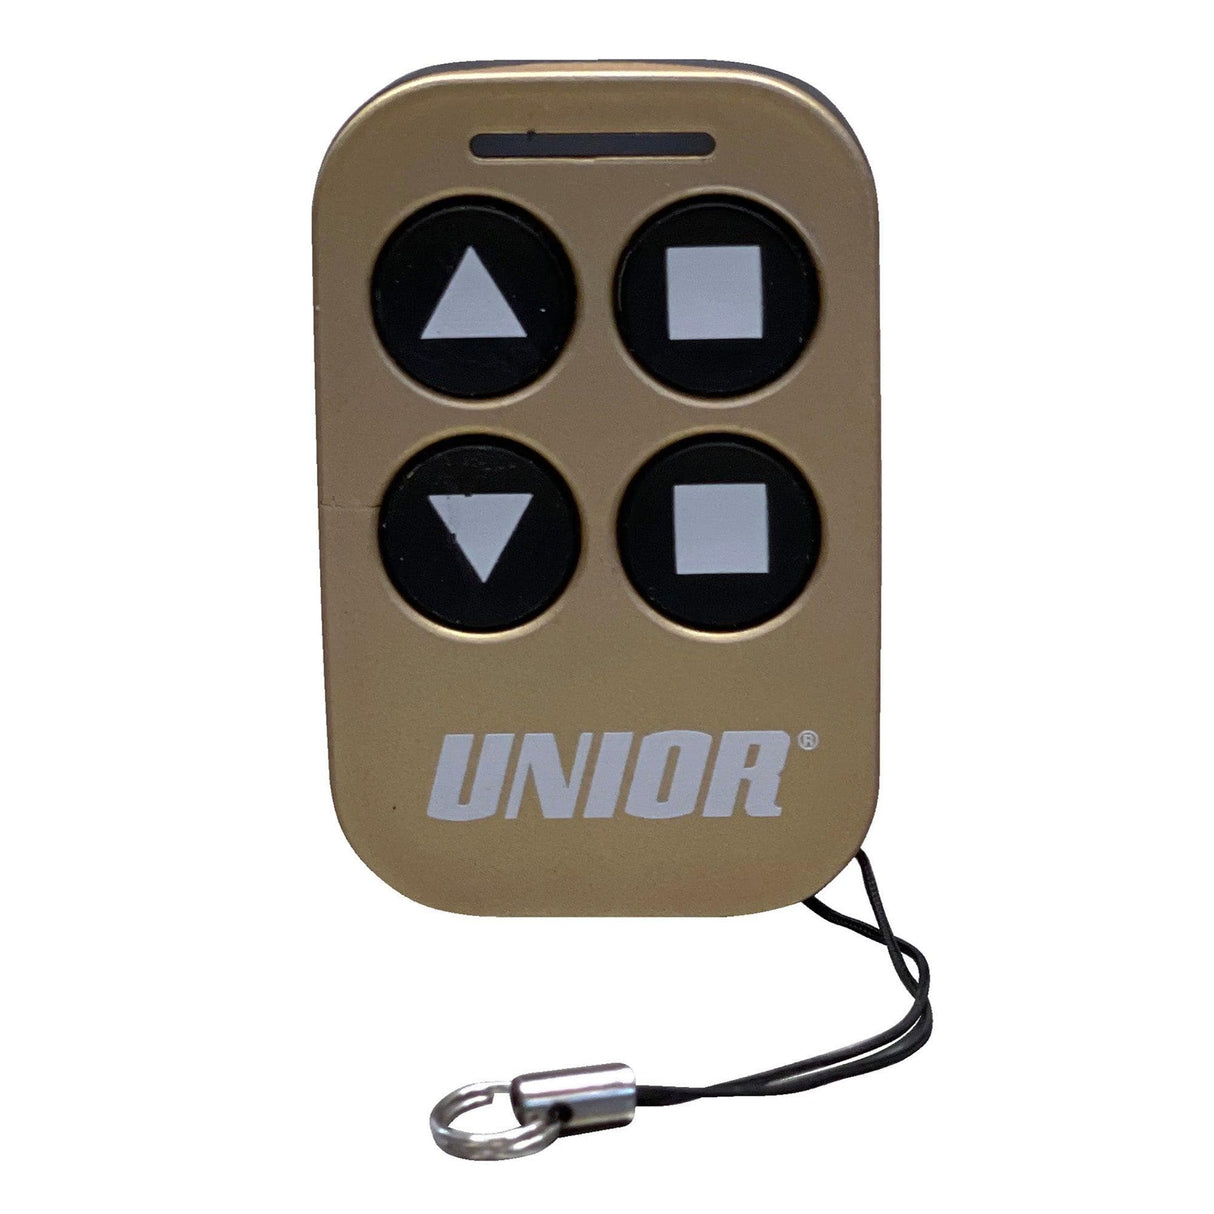 Unior Remote Control Set For Electric Repair Stand 1693El: